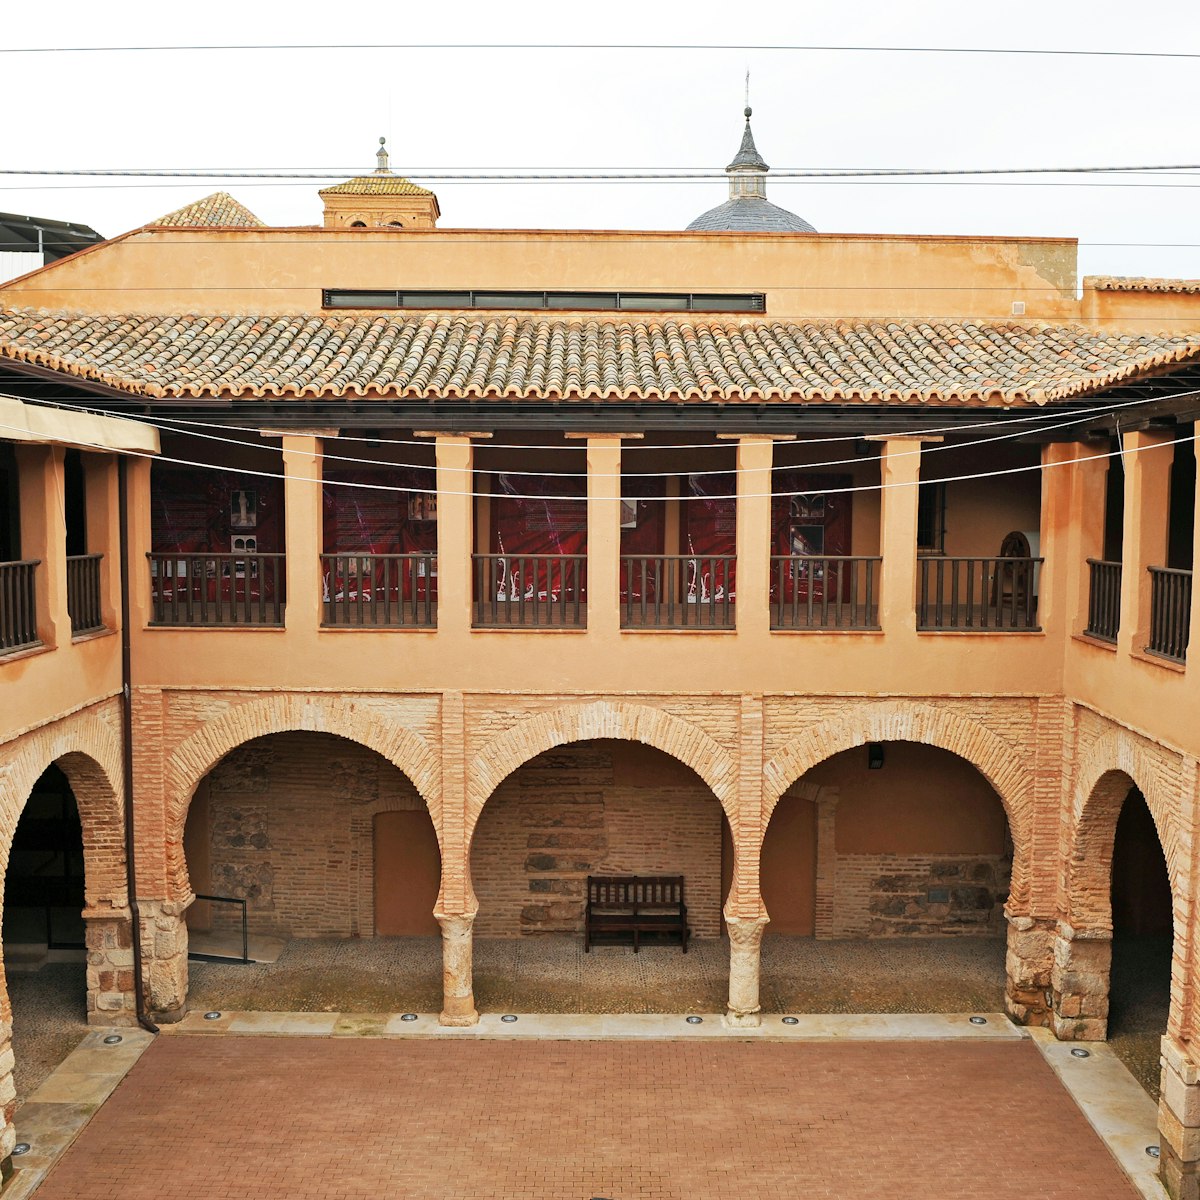 National Museum of Theater in Maestrales Palaces (Palacios Maestrales) of Almagro, Castilla la Mancha, Spain.